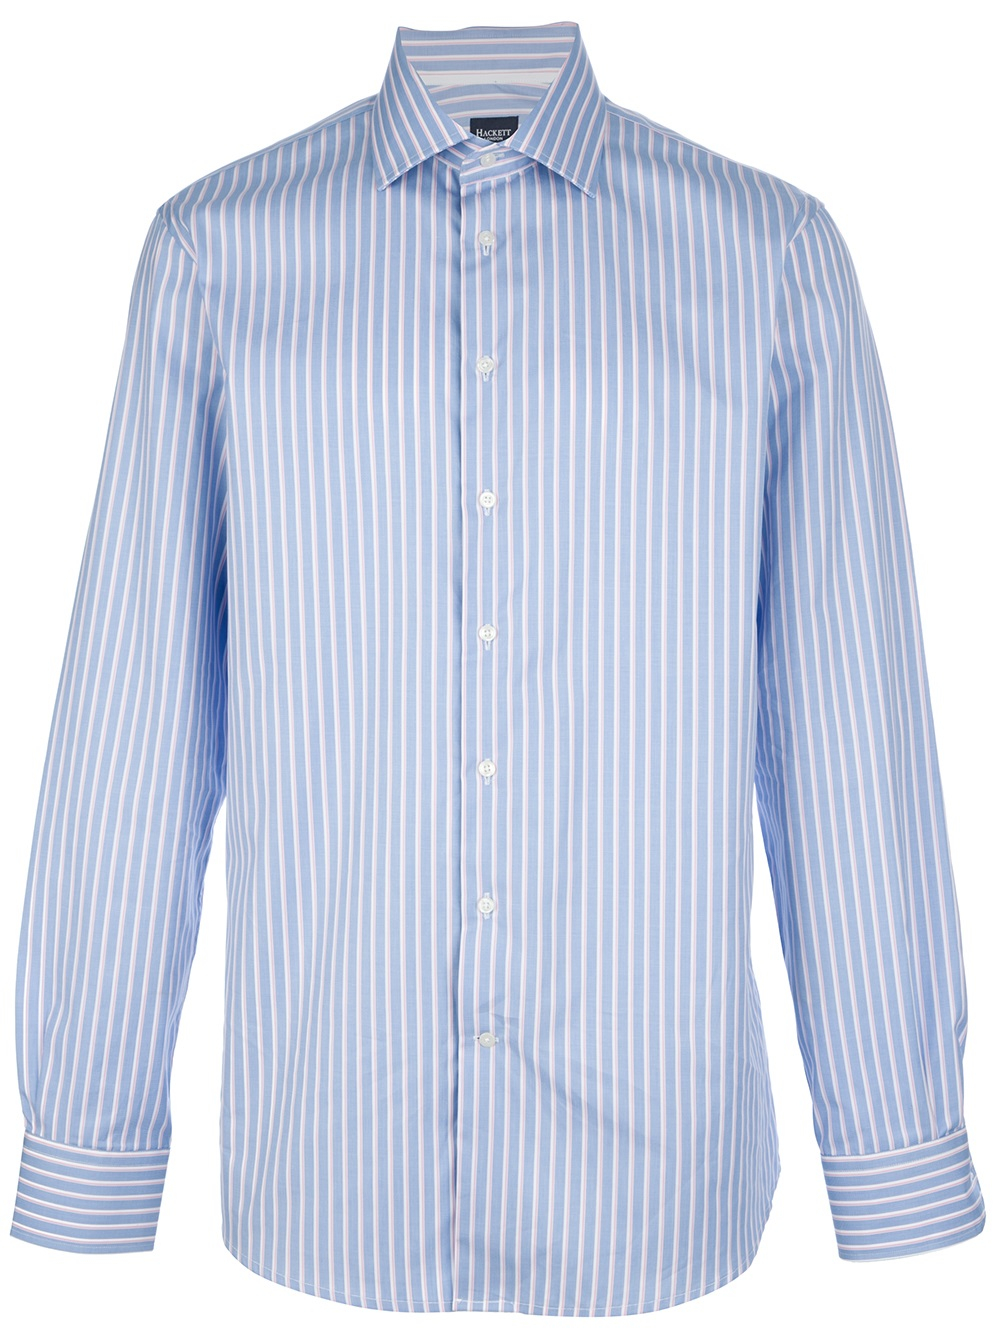 Hackett Pastel Striped Shirt in Blue for Men - Lyst